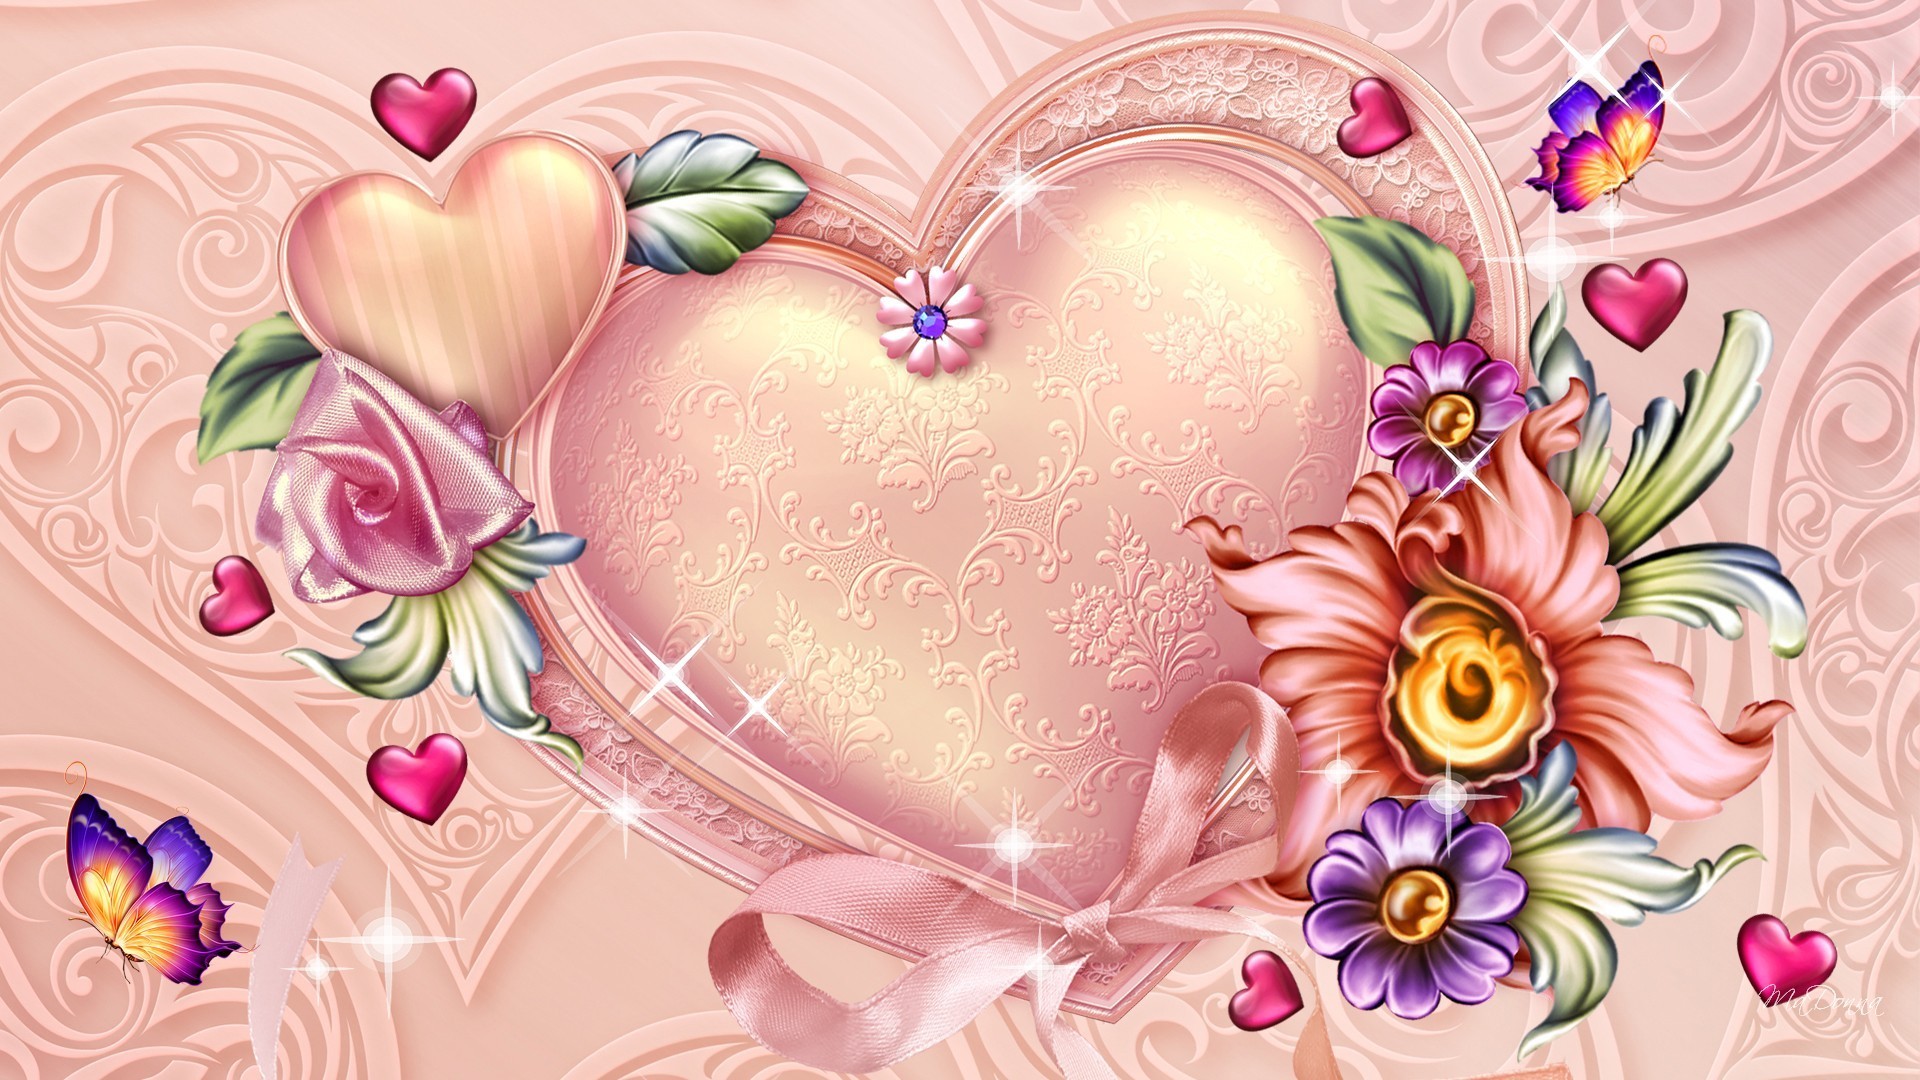 1920x1080  Romantic Heart Day Valentines Abstract Romance Butterfly Pink  Floral Flowers Butterflies Papillon Flower Wallpaper Hd